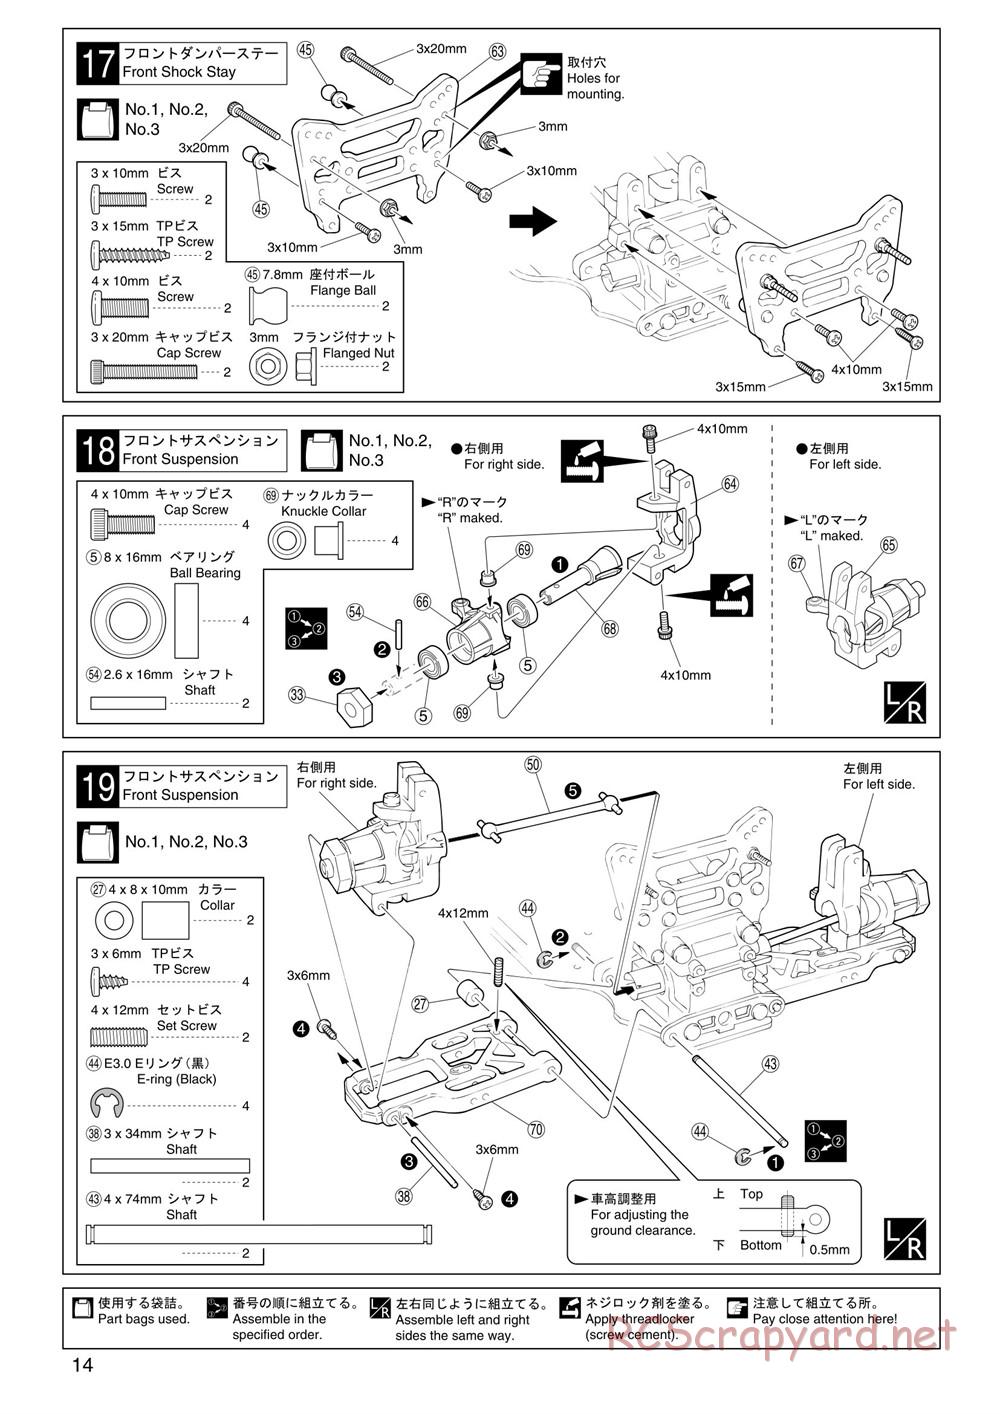 Kyosho - Super Eight GP20 Landmax 2 - Manual - Page 14